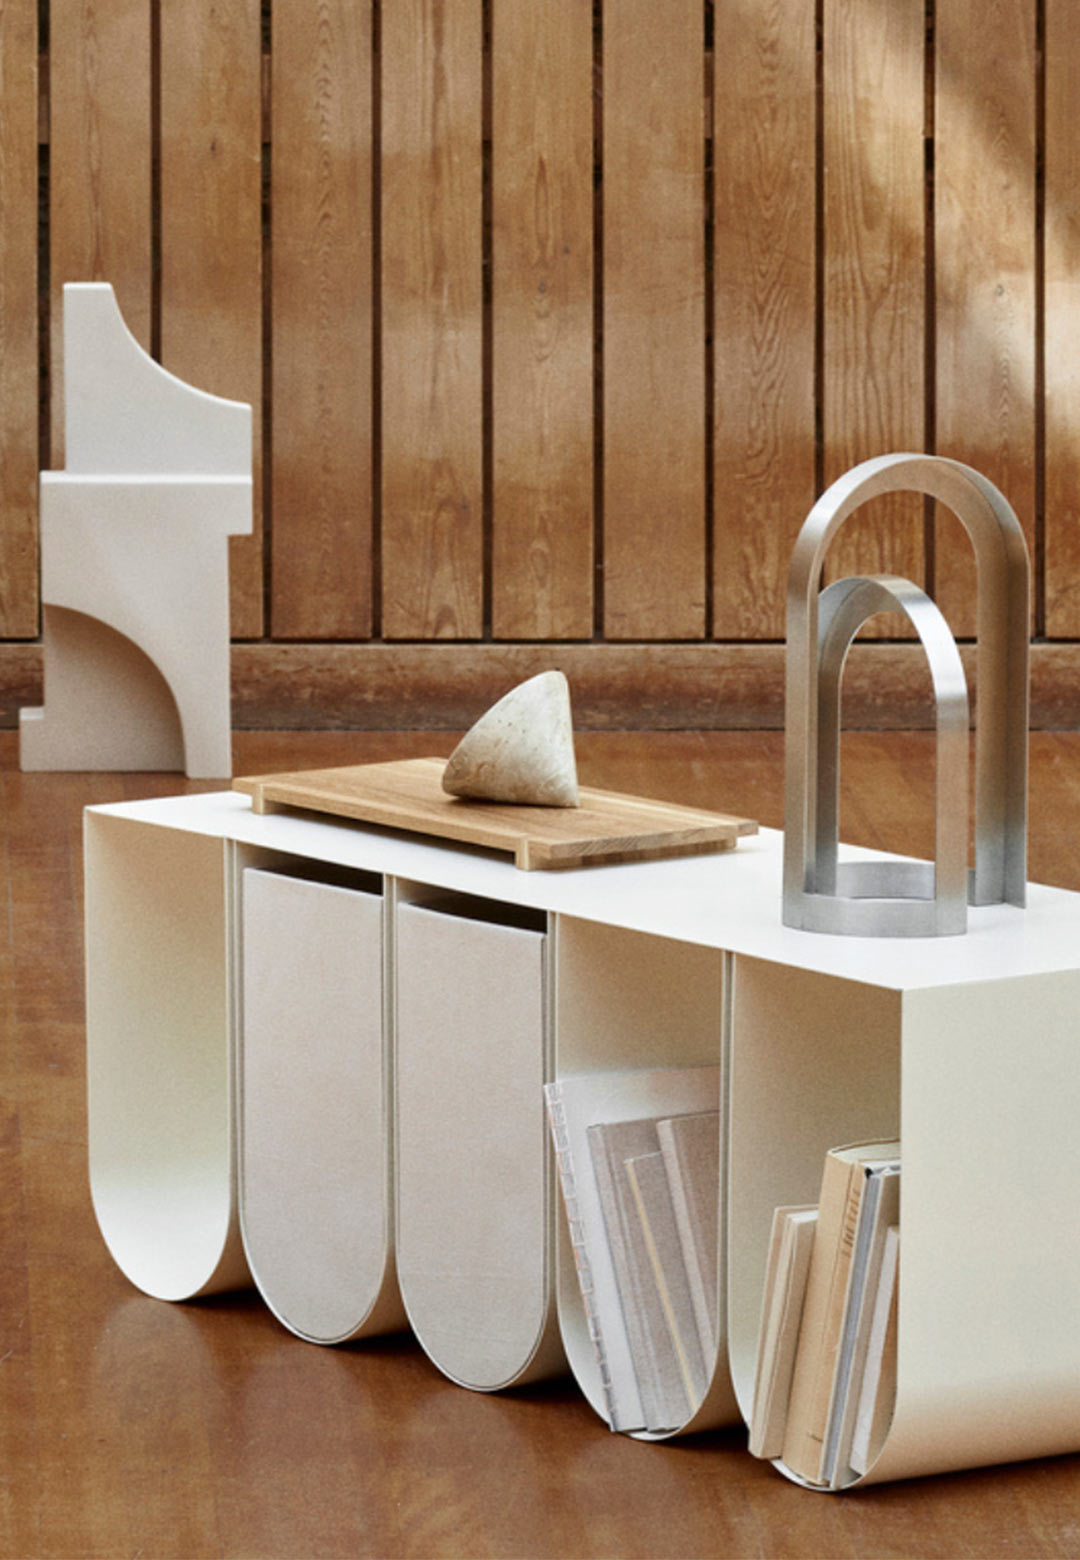 Kristina Dam Studio to thematically interpret sculptural minimalism for 3daysofdesign